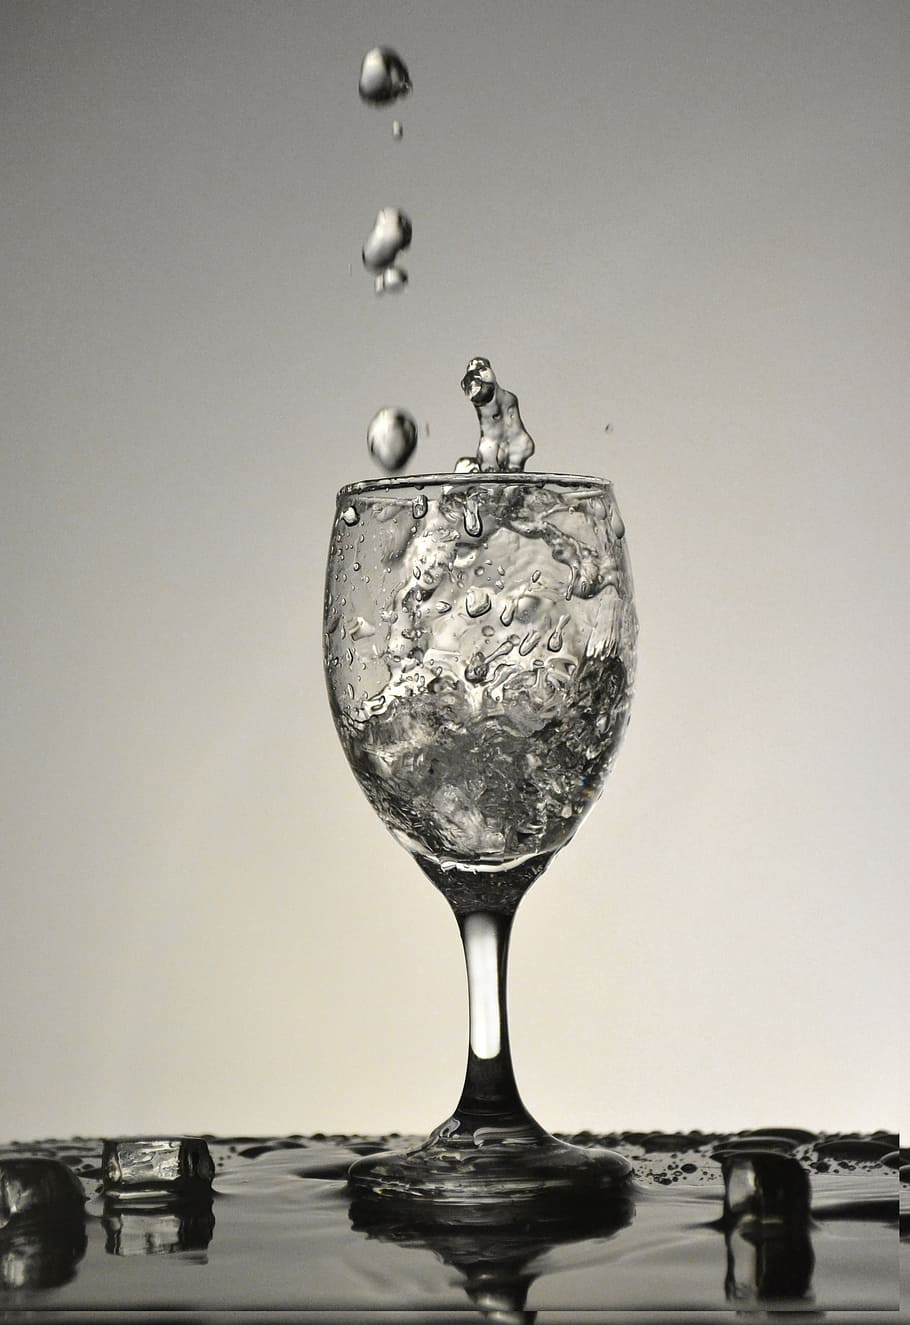 grayscale photography, wine glass, water, inside, water droplets, capture water droplets, cup, still life, glass, splashing